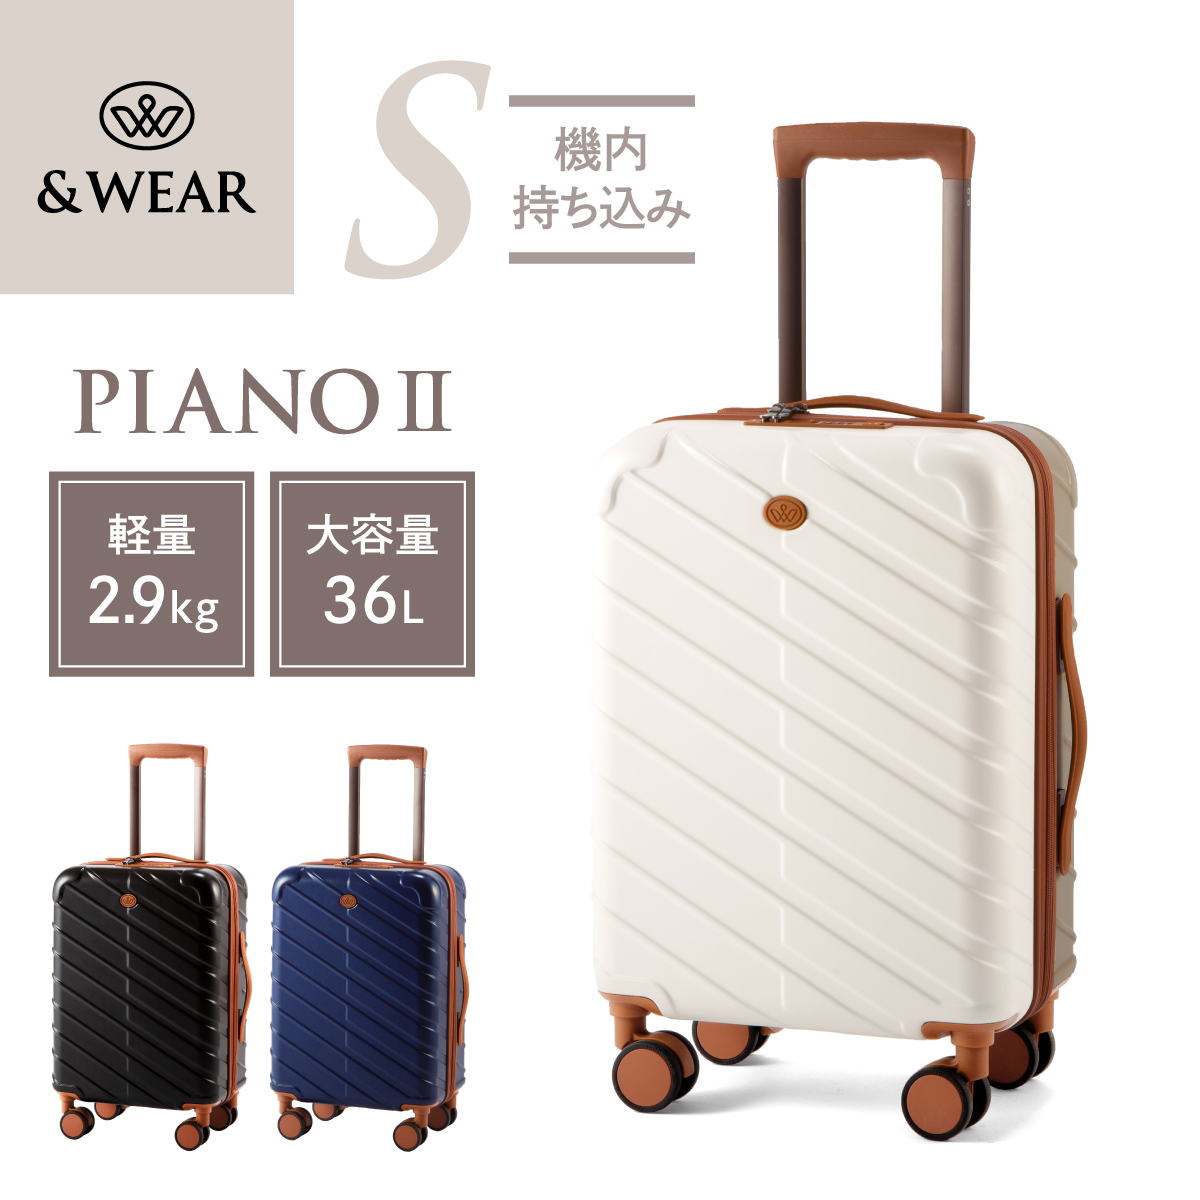 &WEAR スーツケース Sサイズ 機内持ち込み ストッパー付き 軽量 高機能 